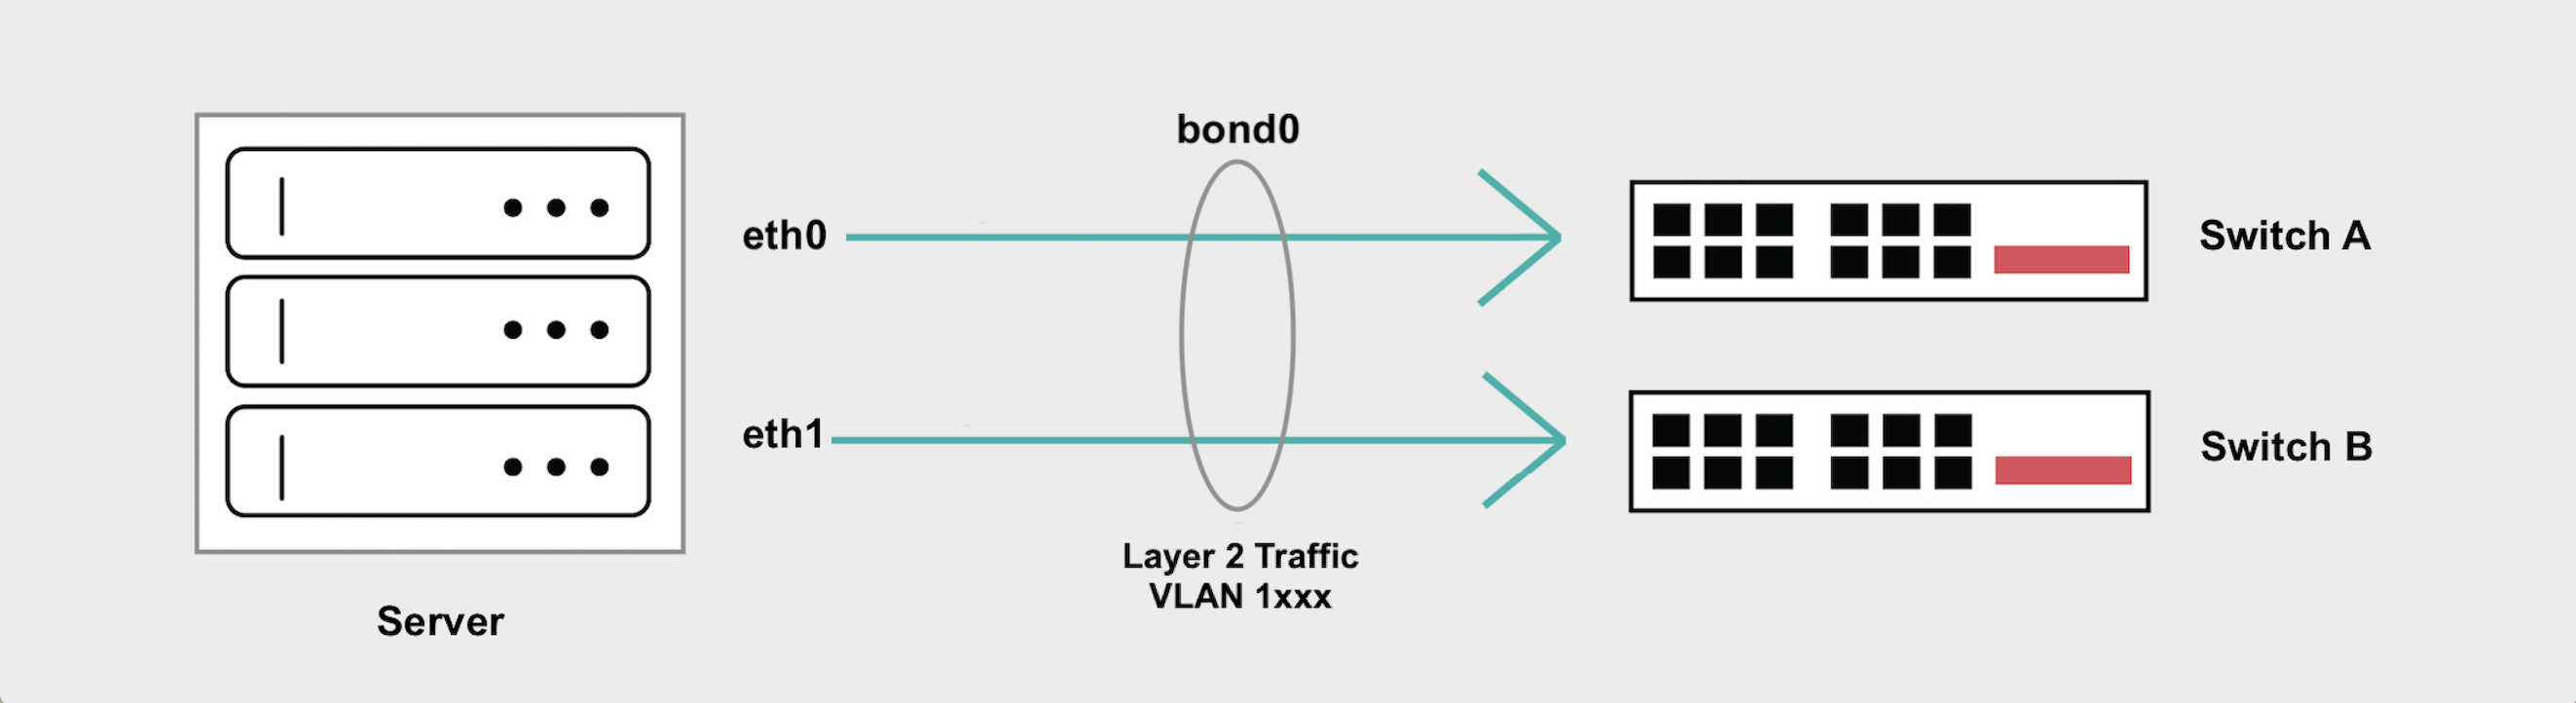 Layer 2 Bonded Diagram